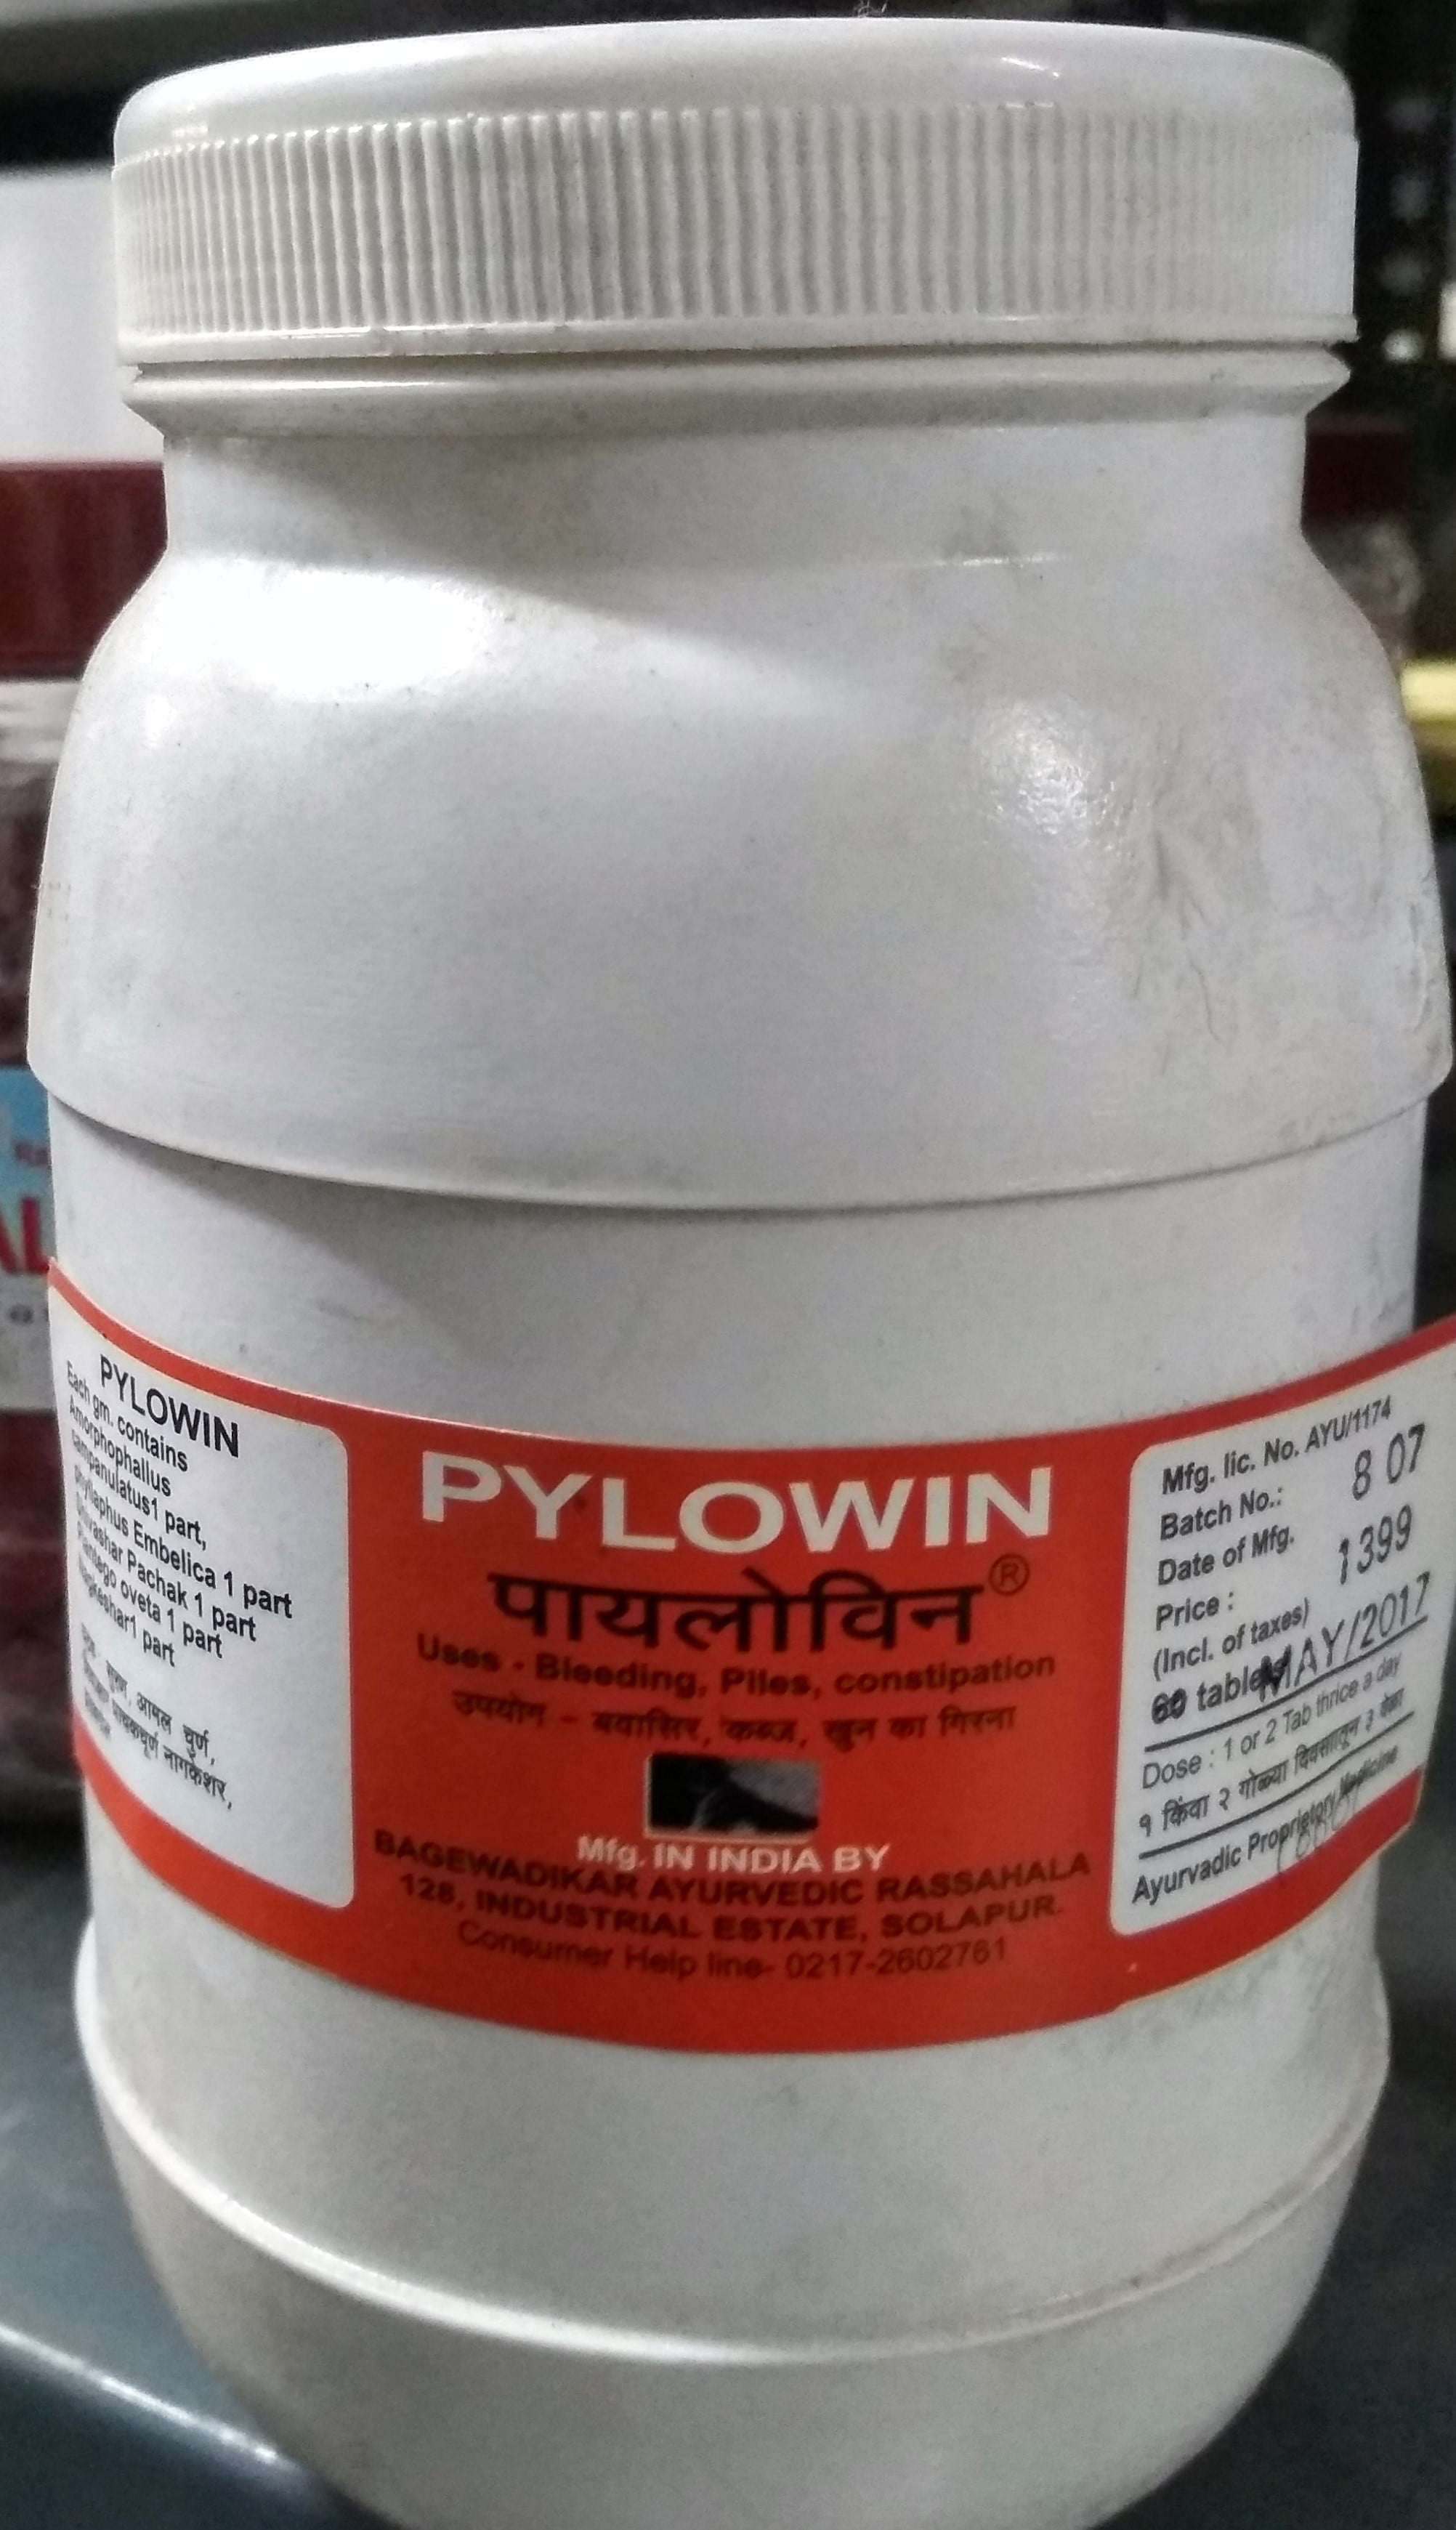 pylowin tablets 500gm upto 20% off bagewadikar ayurvedic rasashala